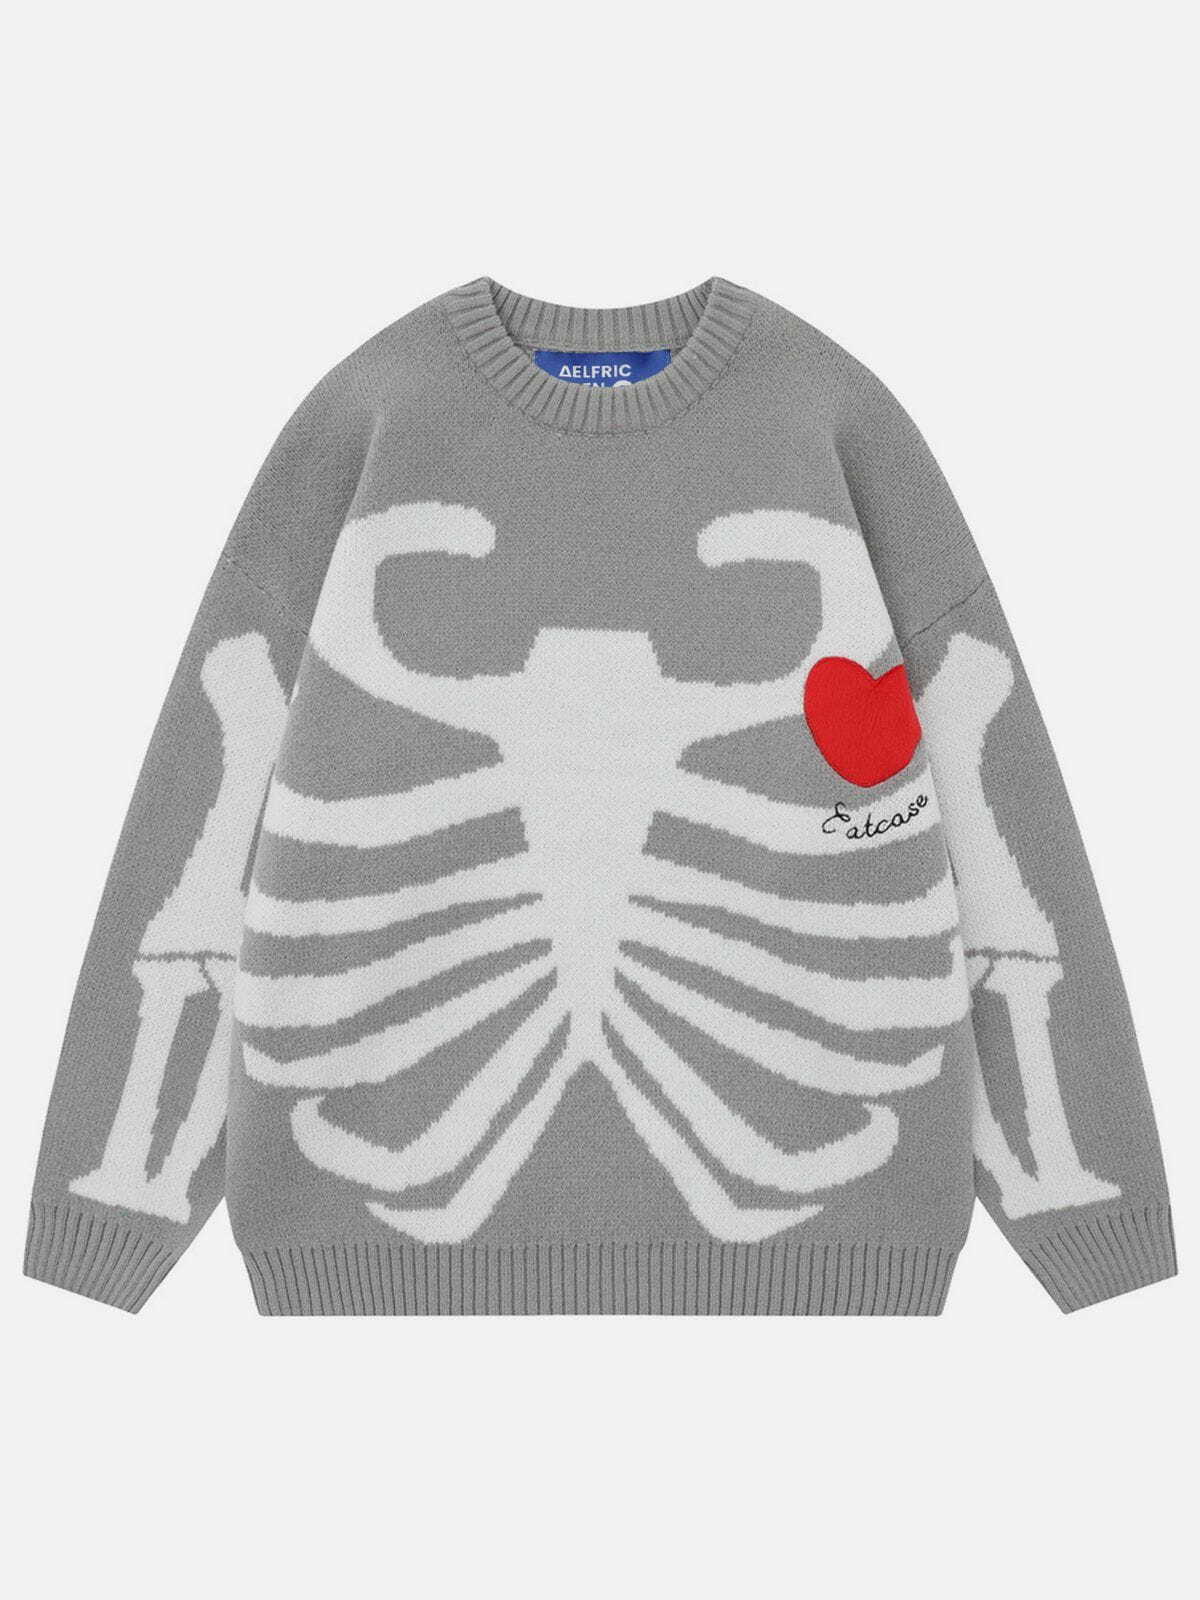 iconic skeleton jacquard sweater   urban & trendy fit 8137